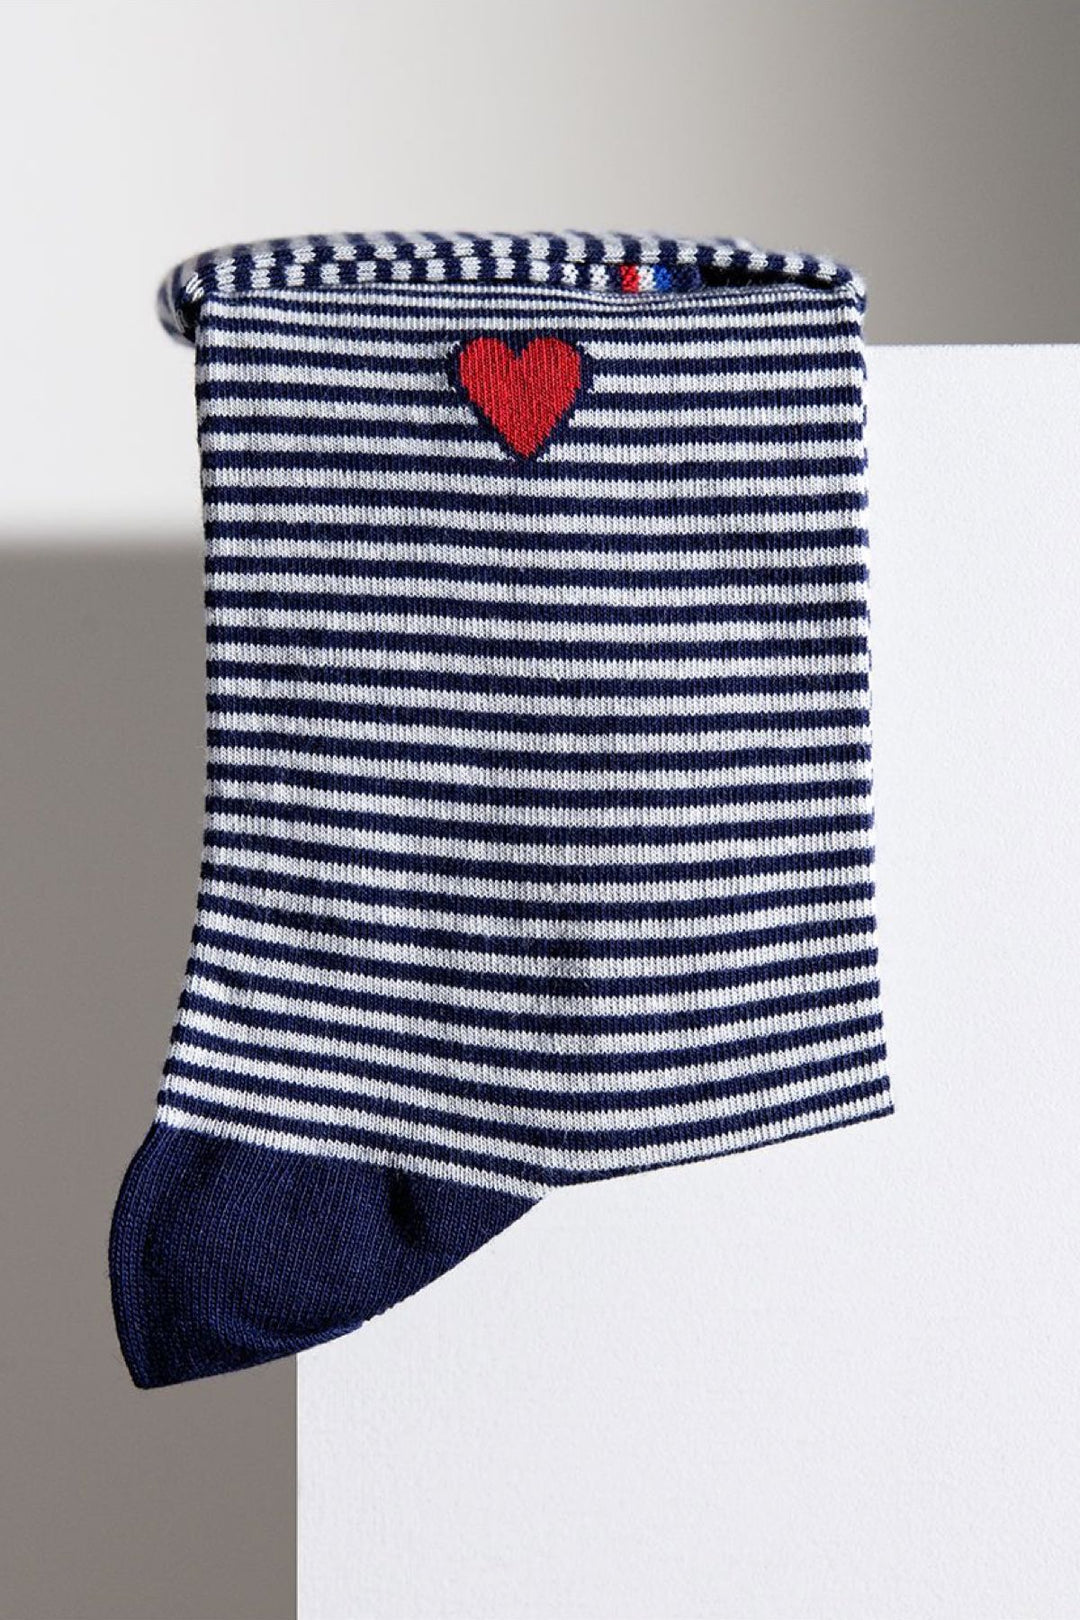 Sailor pattern socks